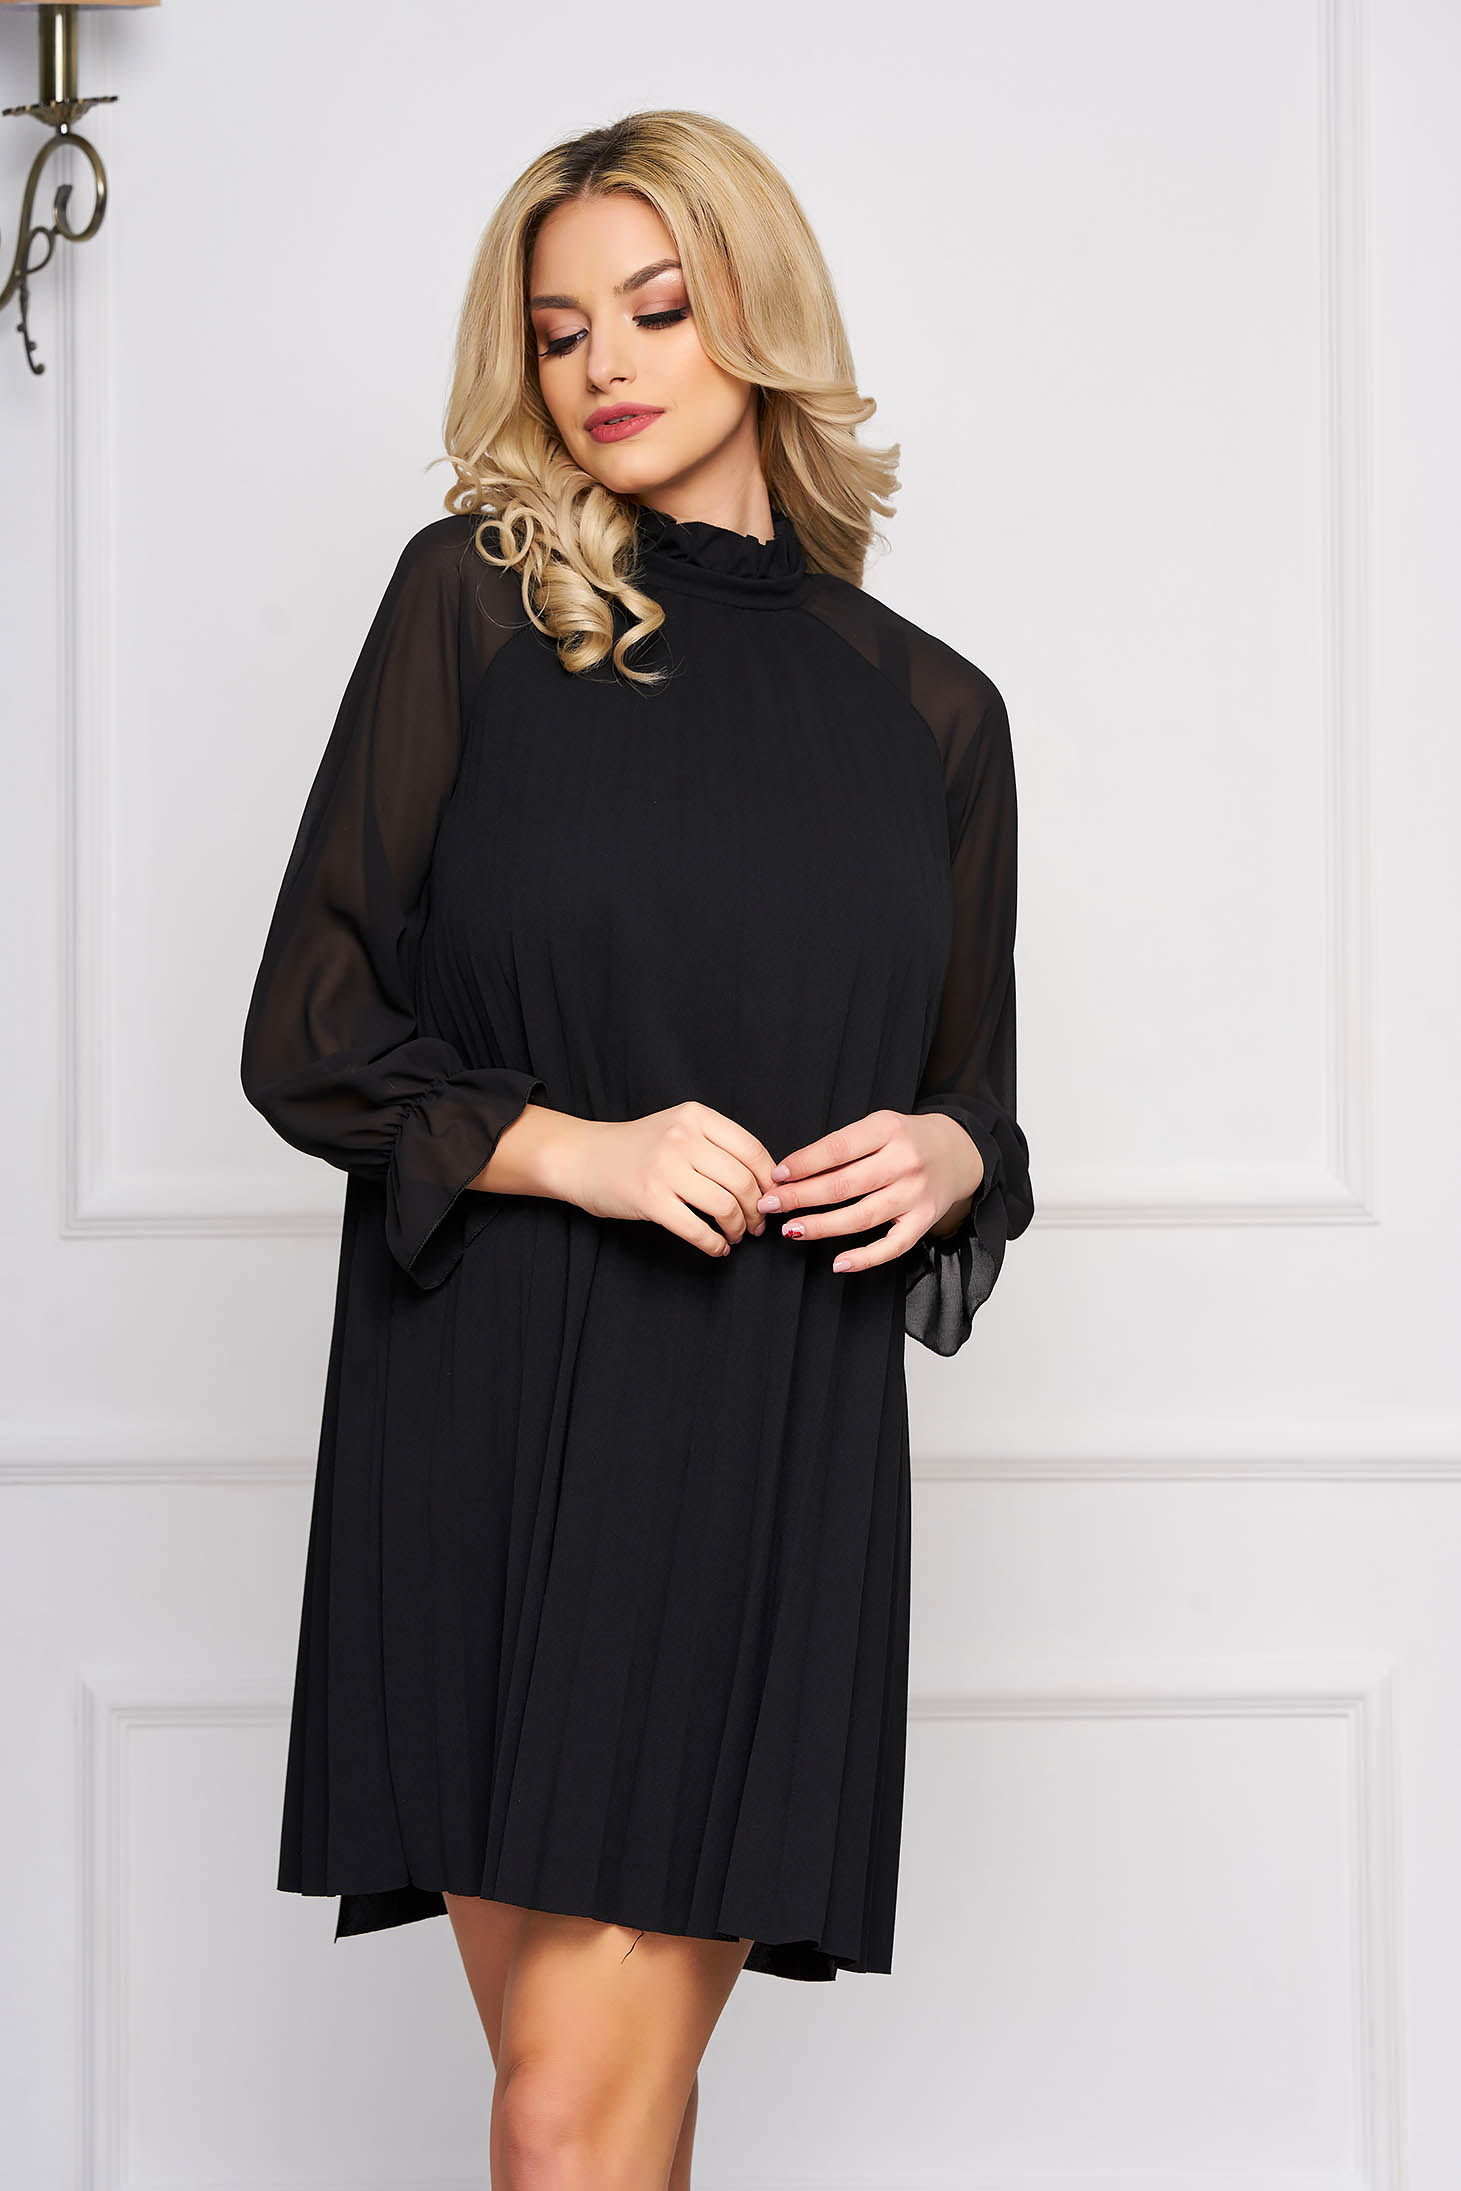 Black dress elegant short cut from veil fabric a-line long sleeved 1 - StarShinerS.com